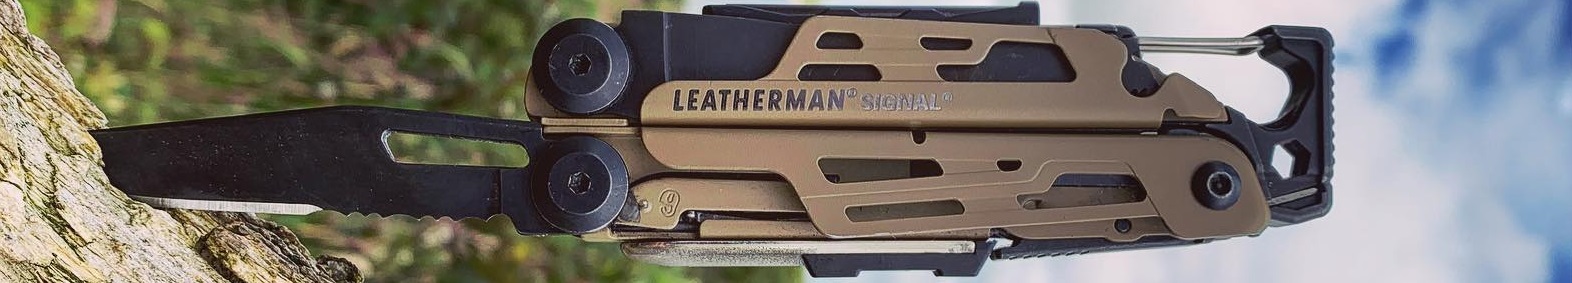 Складний мультиінструмент Leatherman Signal Coyote Standard